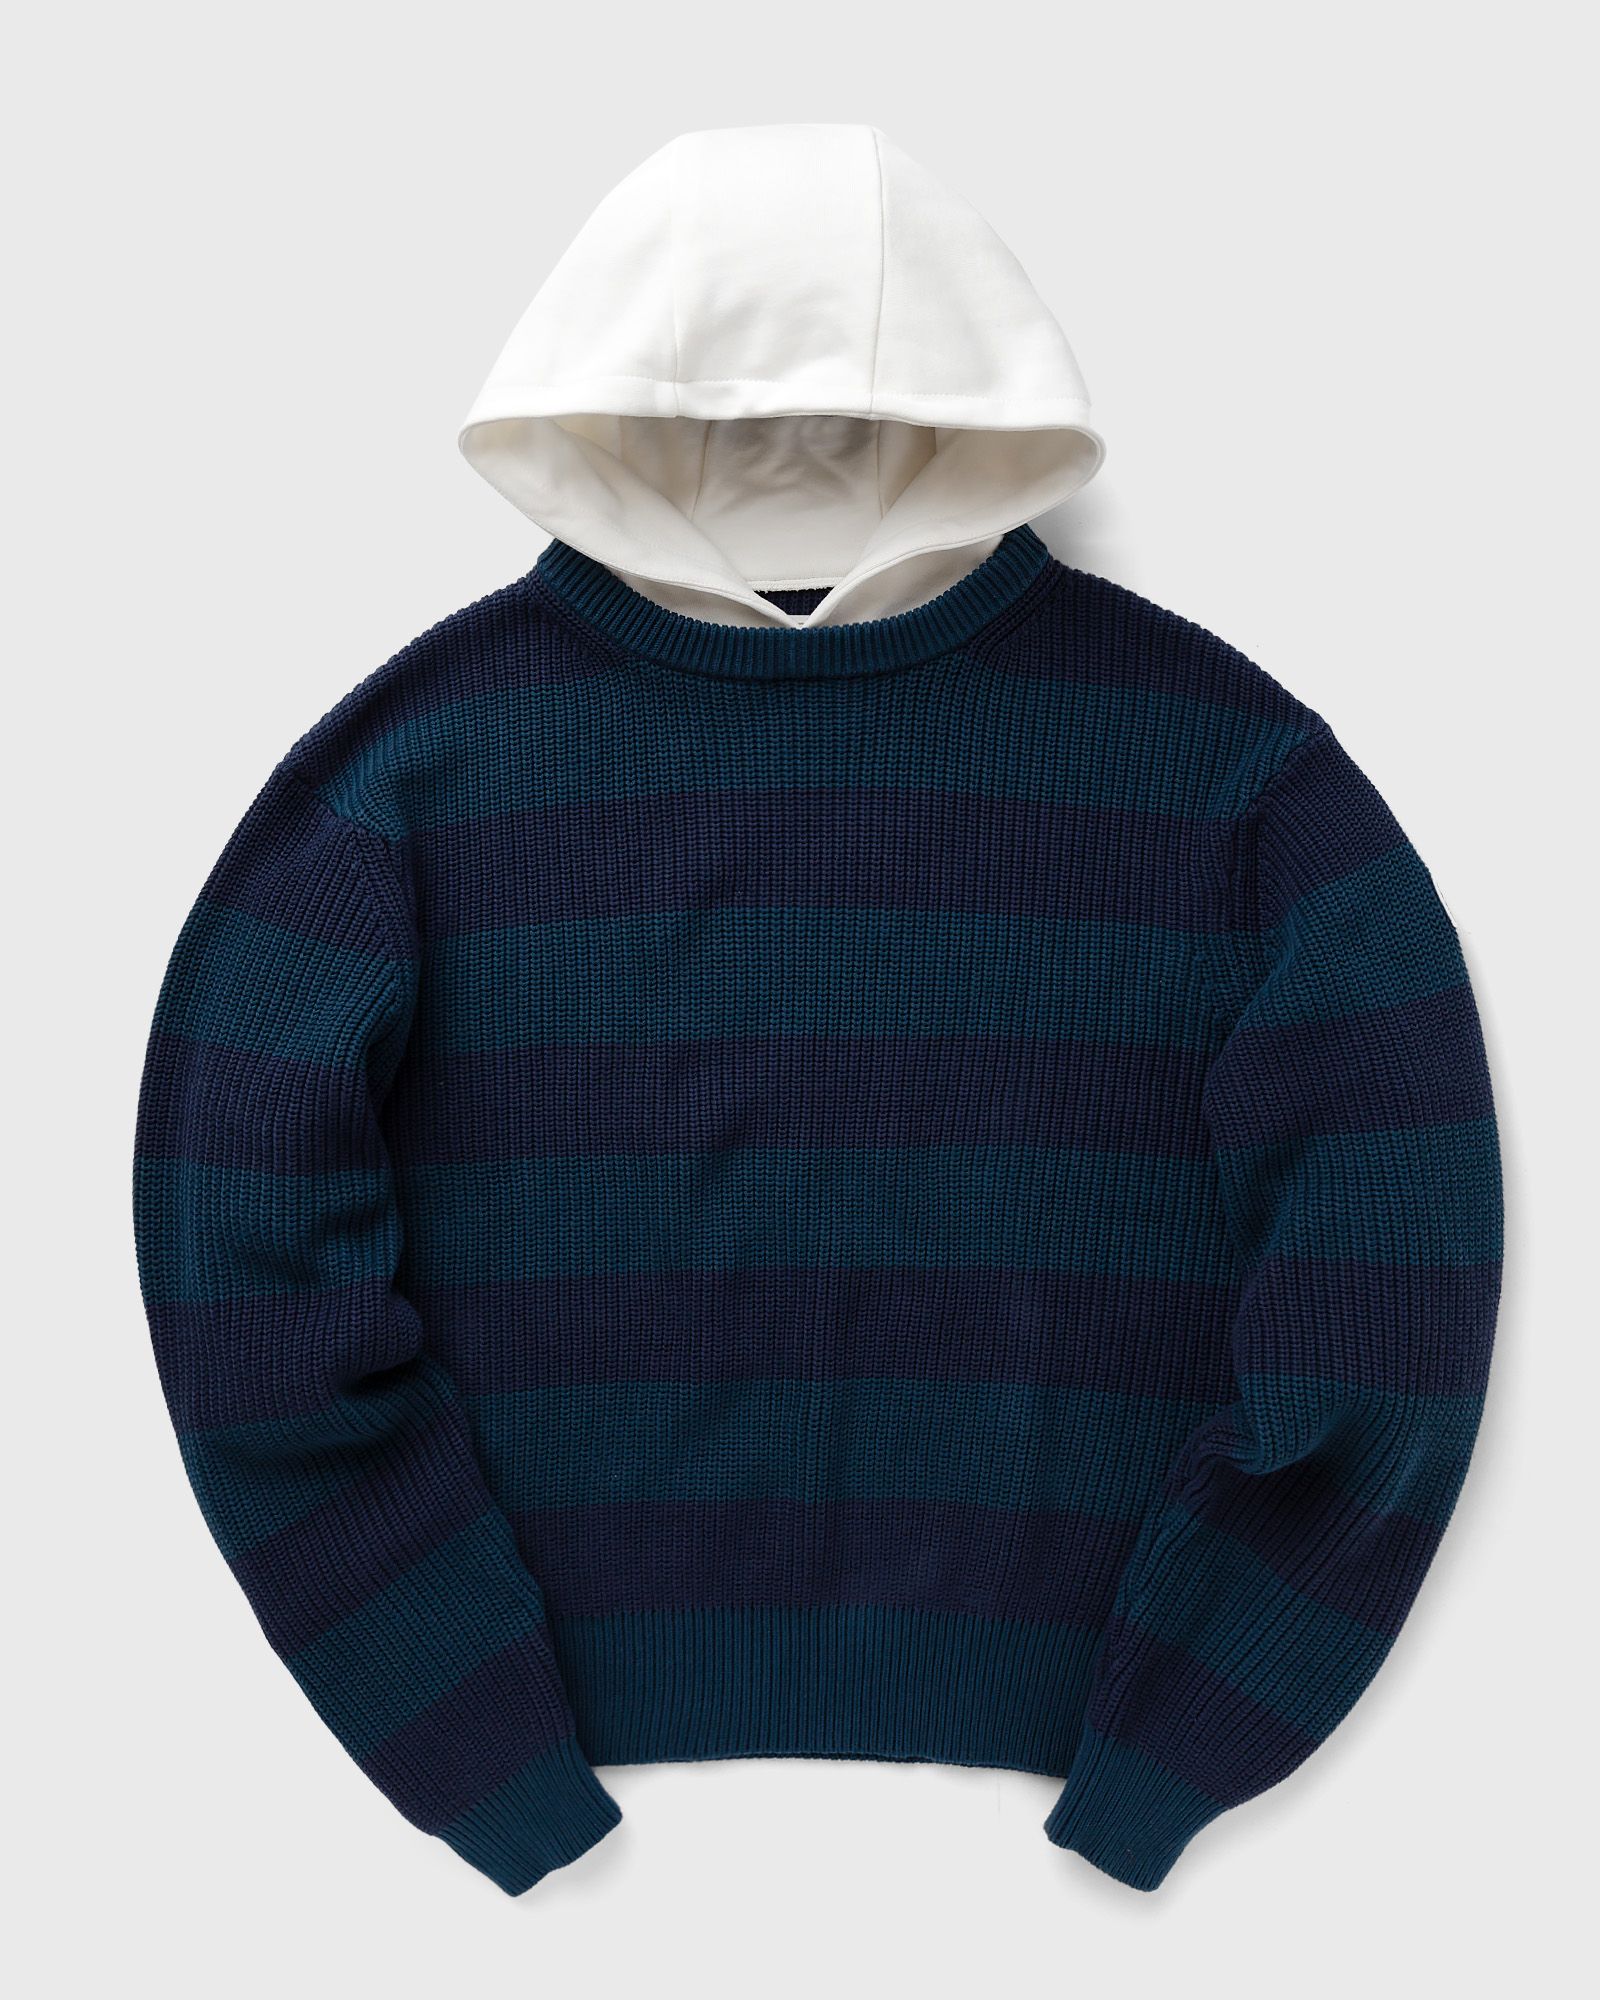 The New Originals - fisherman rib knit hoodie men hoodies|pullovers blue|green in größe:xl